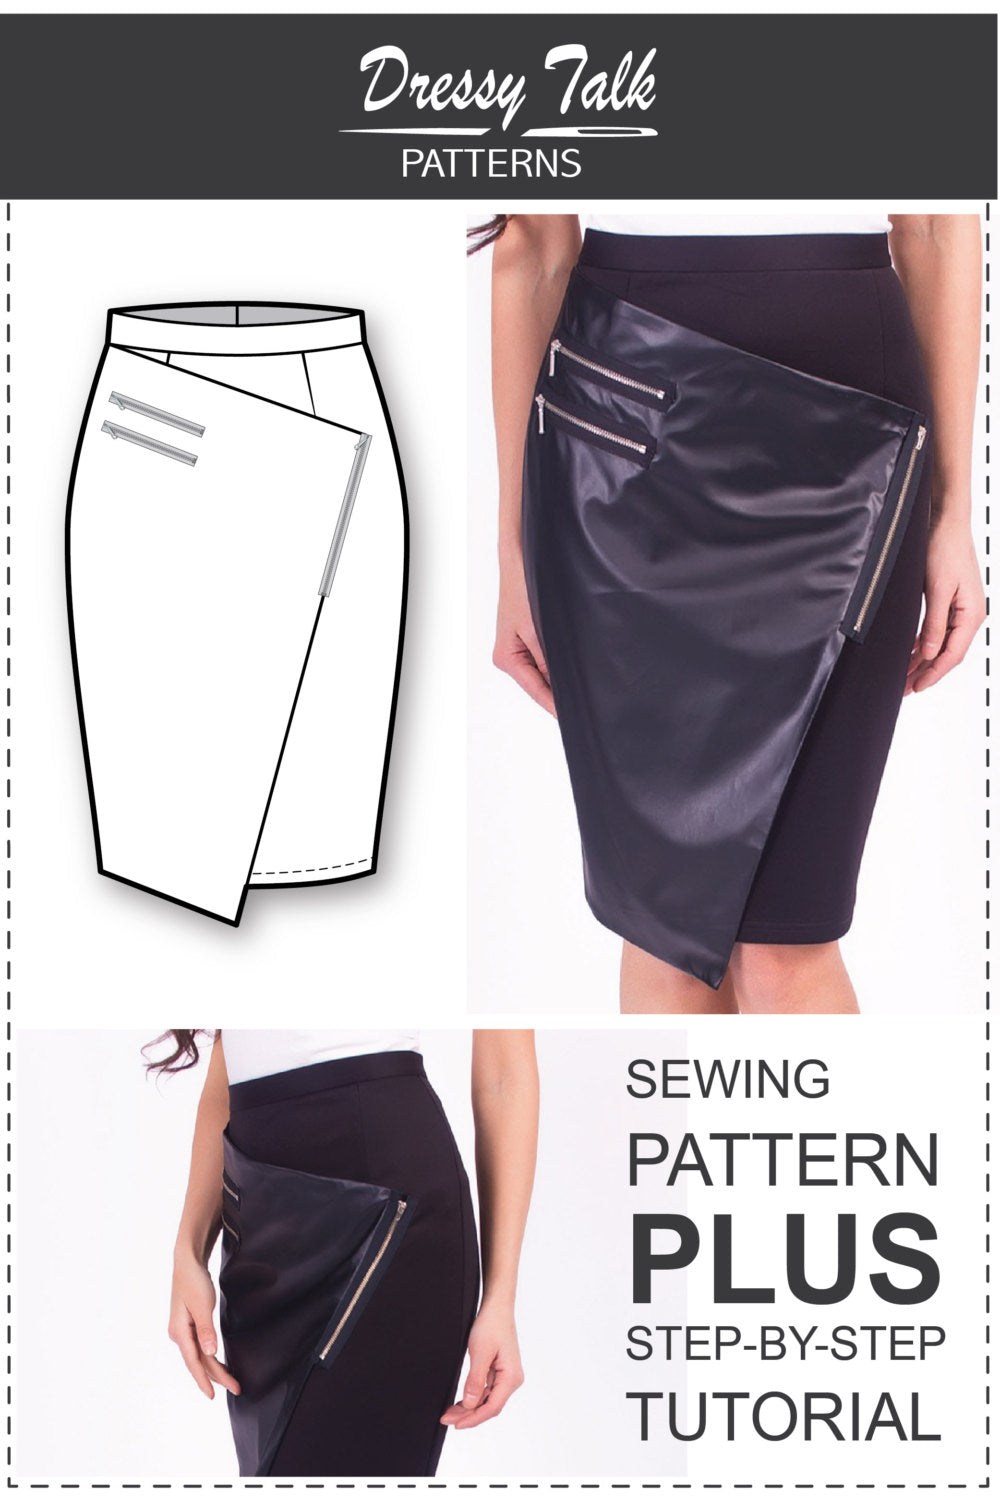 Wrap Skirt Pattern - Sewing Tutorials - Skirt Patterns - Wrap Skirt Tutorial - Fashion Patterns - Plus Size Sewing Patterns - Sewing Ideas